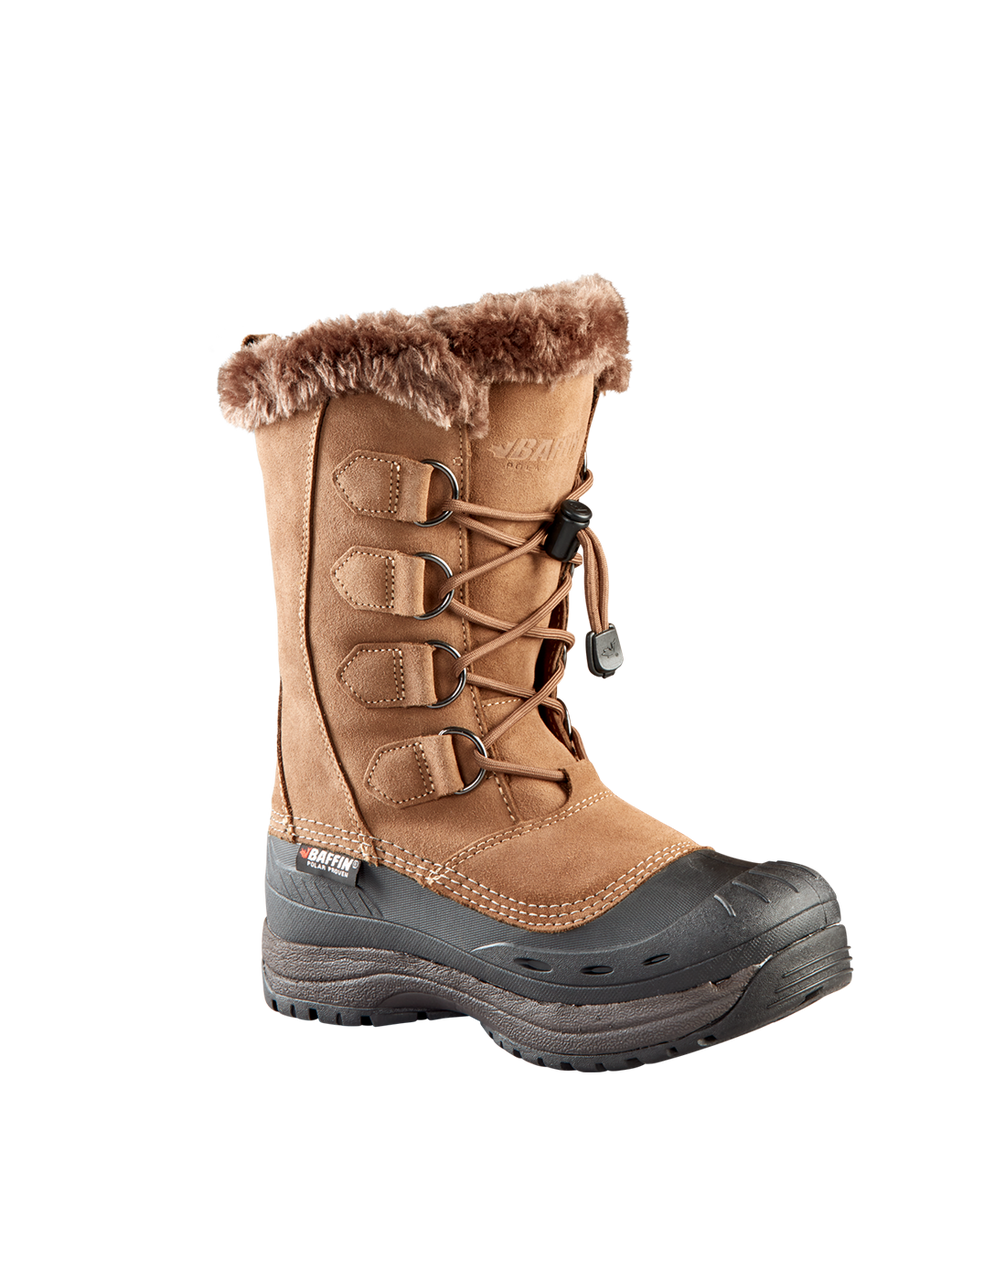 Baffin New Women's Chloe Boots, 11-74106